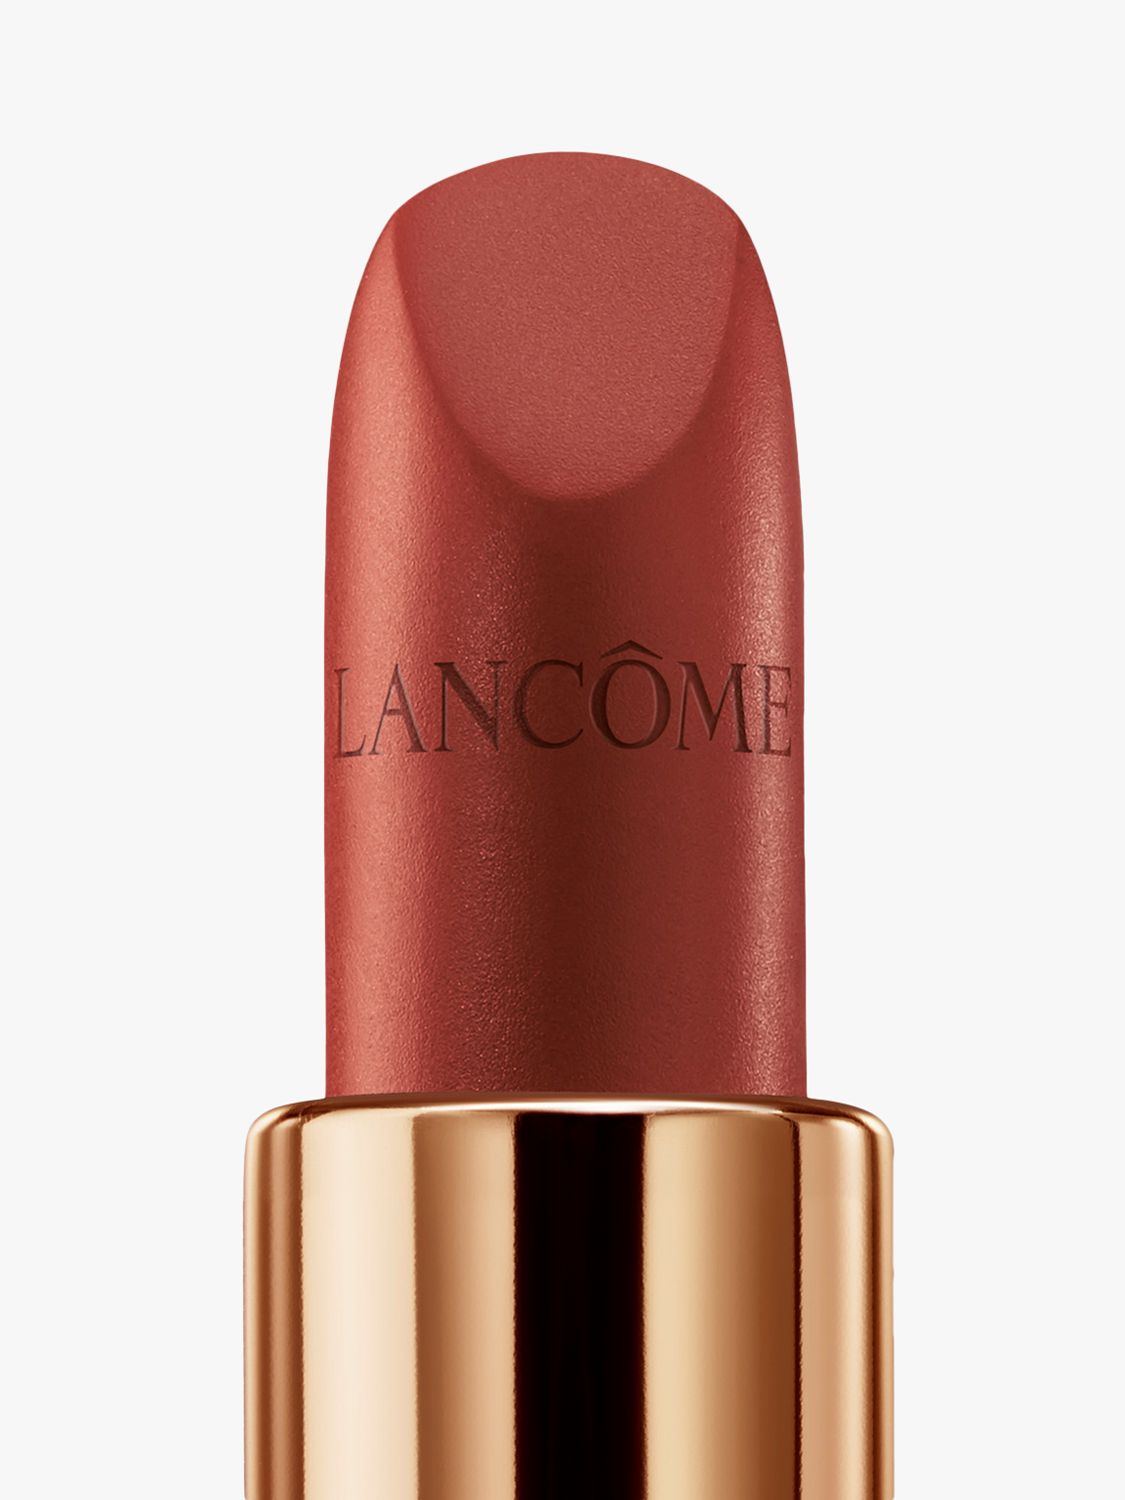 Lancôme L'Absolu Rouge Intimatte Lipstick, 299 French Cashmere 3